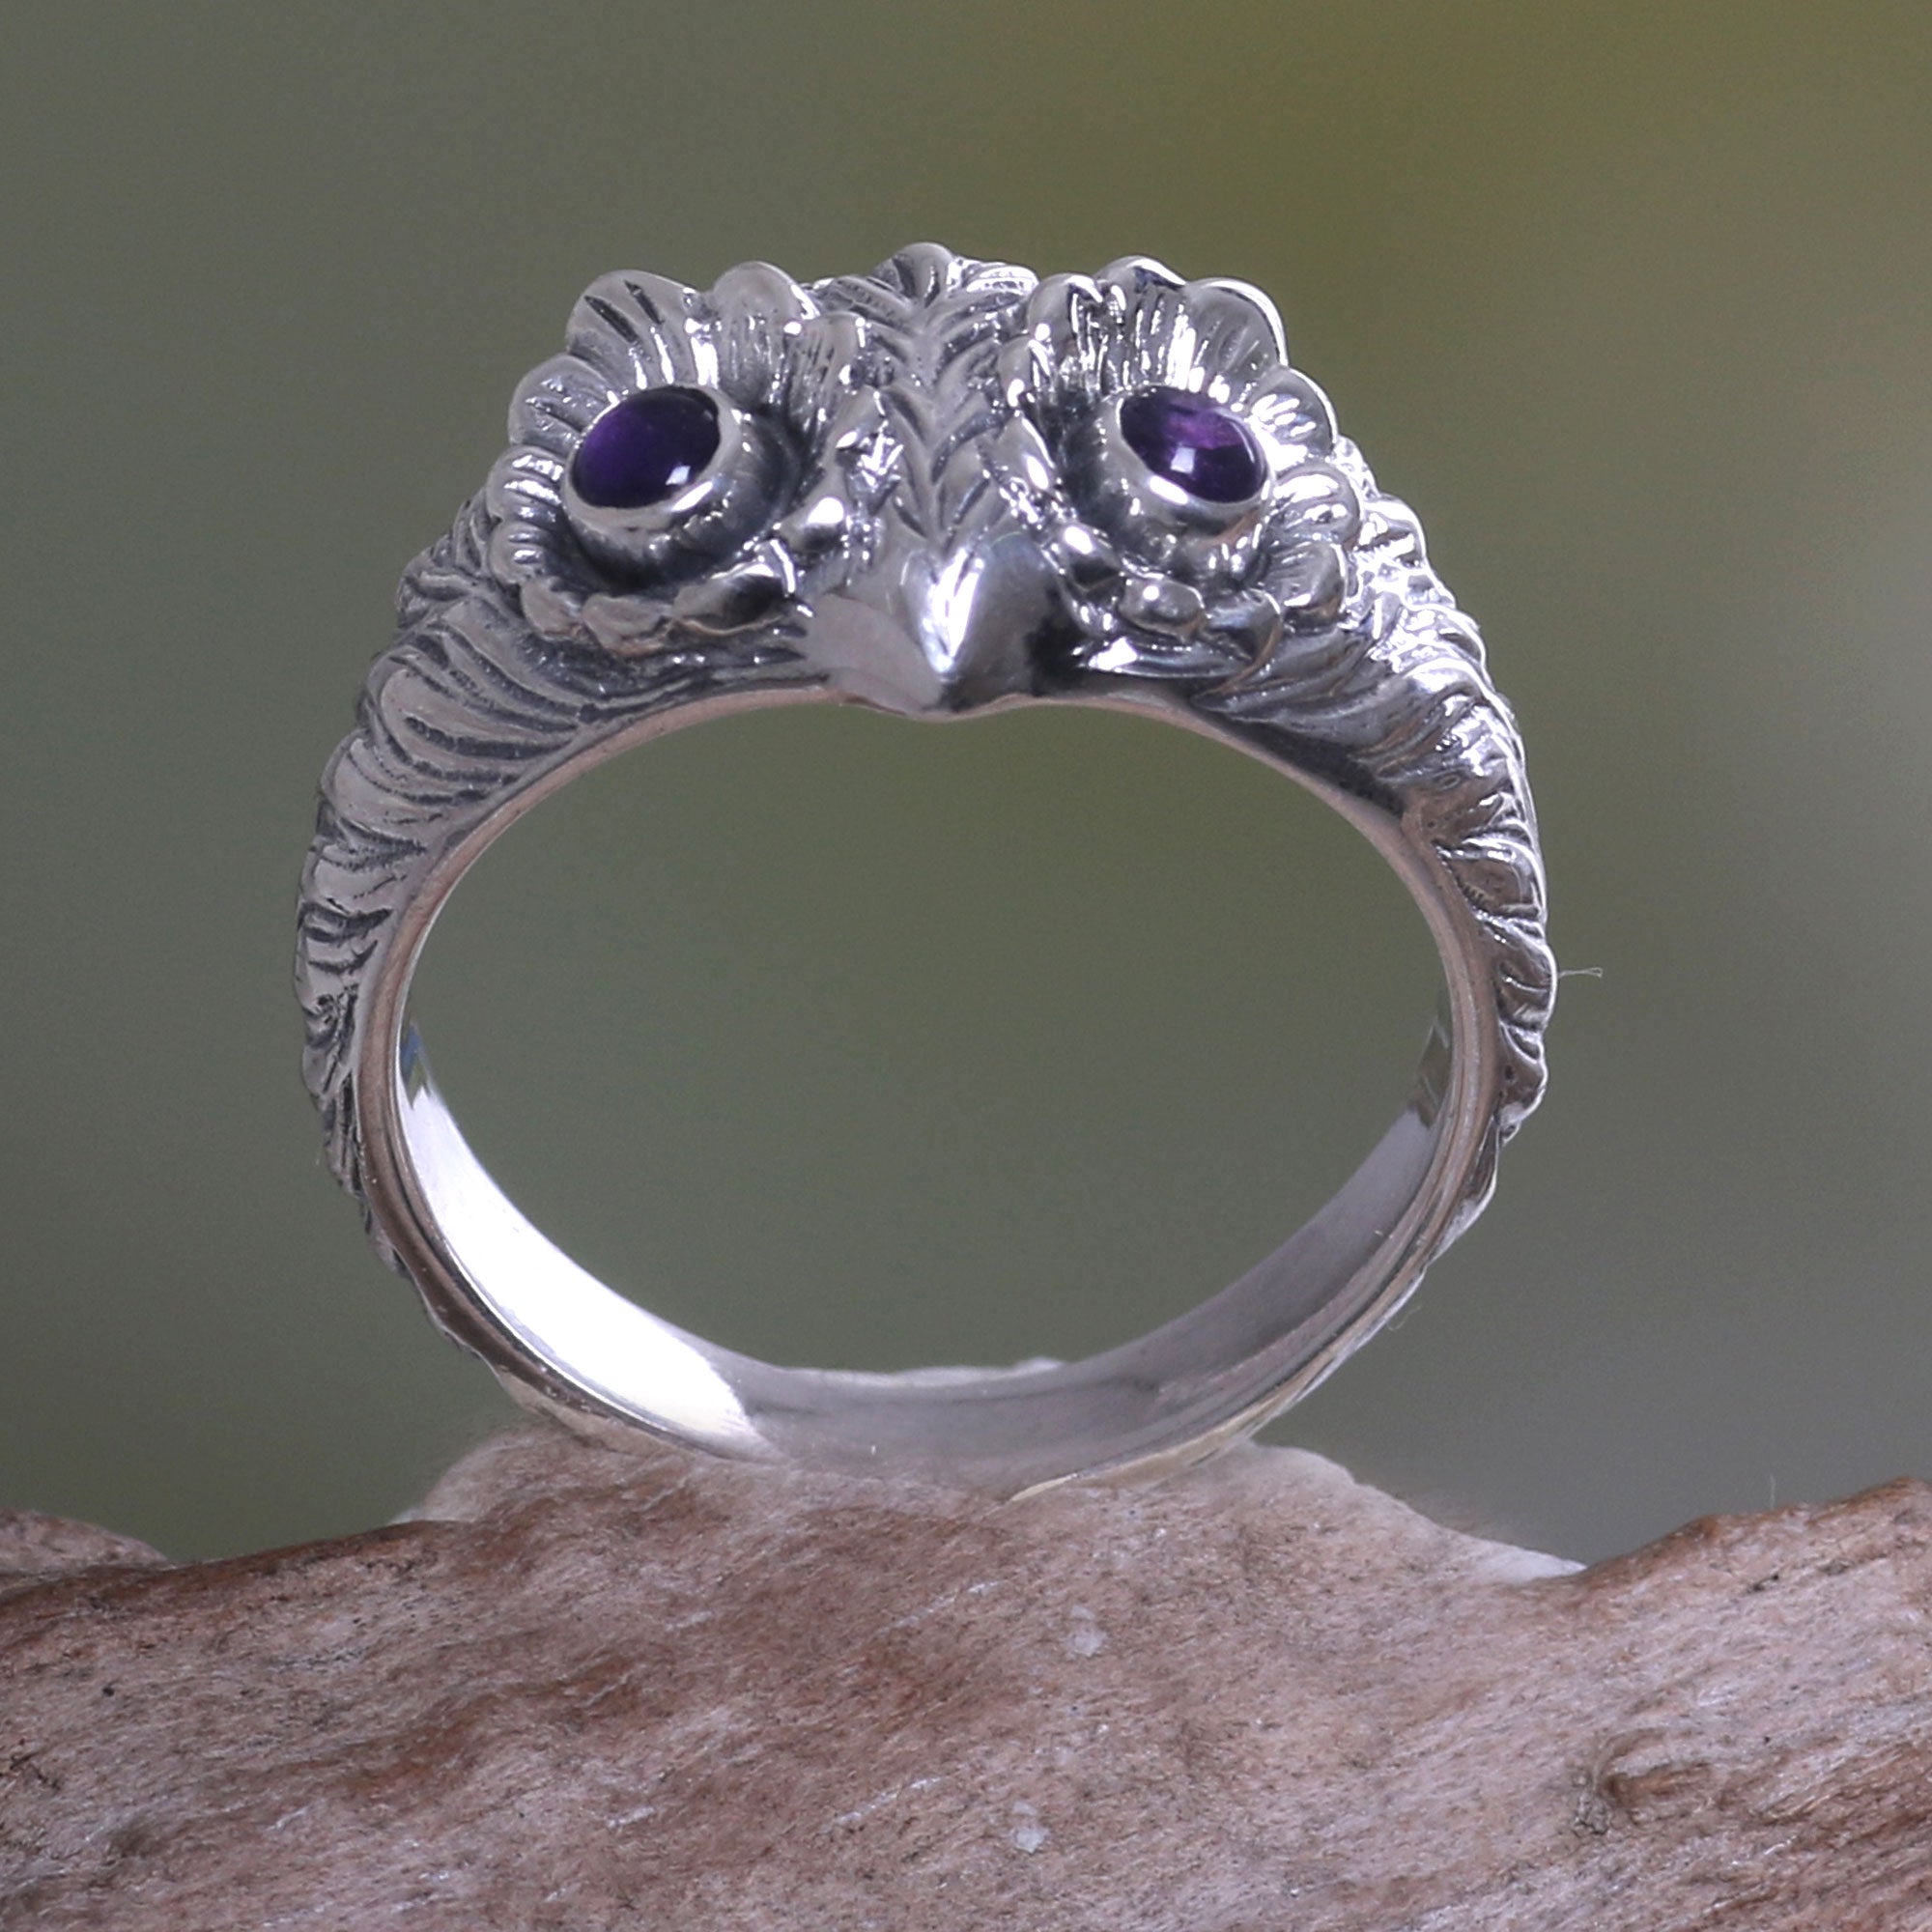 NOVICA Owl Wisdom Amethyst & Silver Band Ring - Size 6